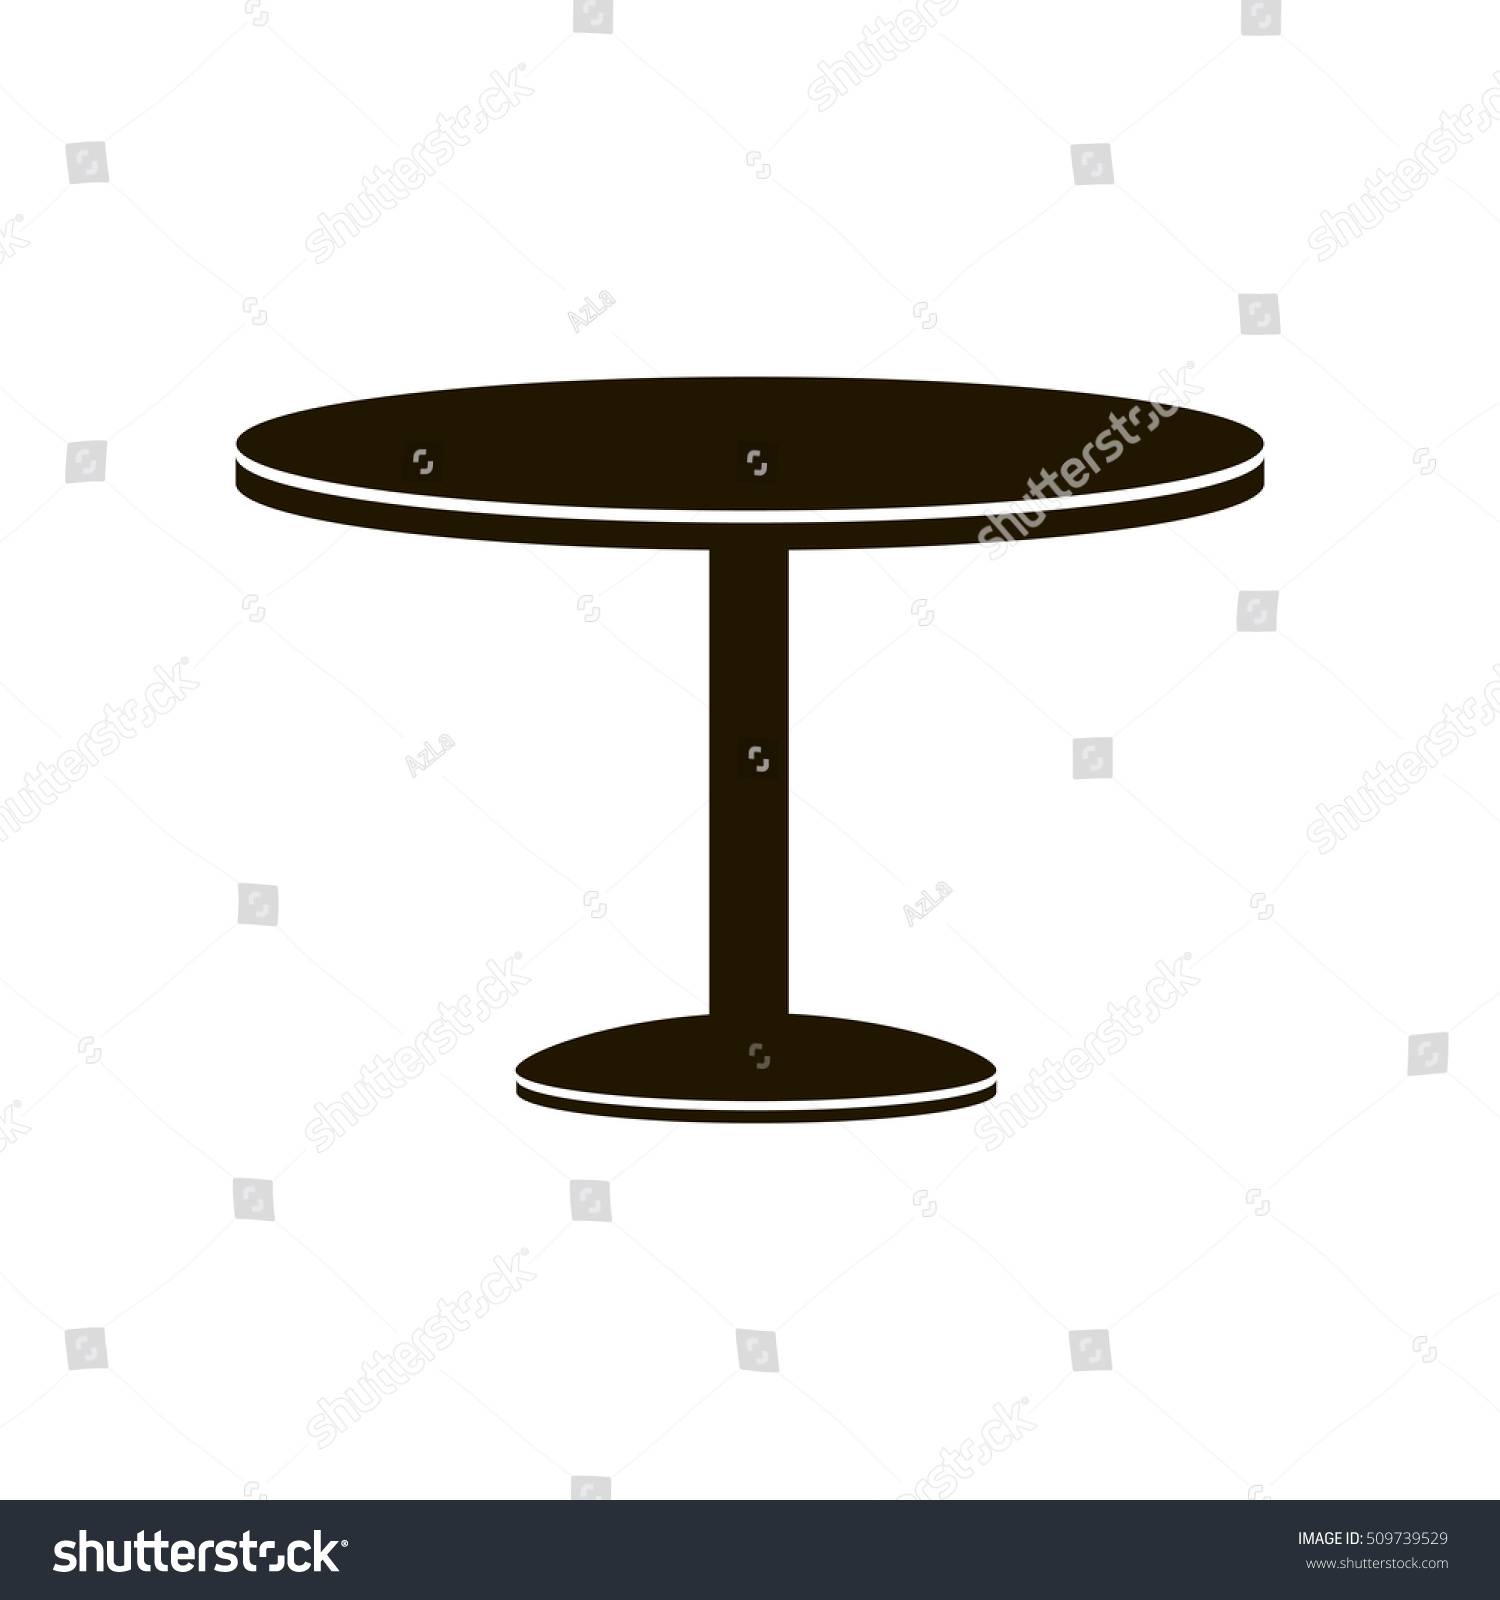 Table Icon Vector Stock Vector 509739529 - Shutterstock